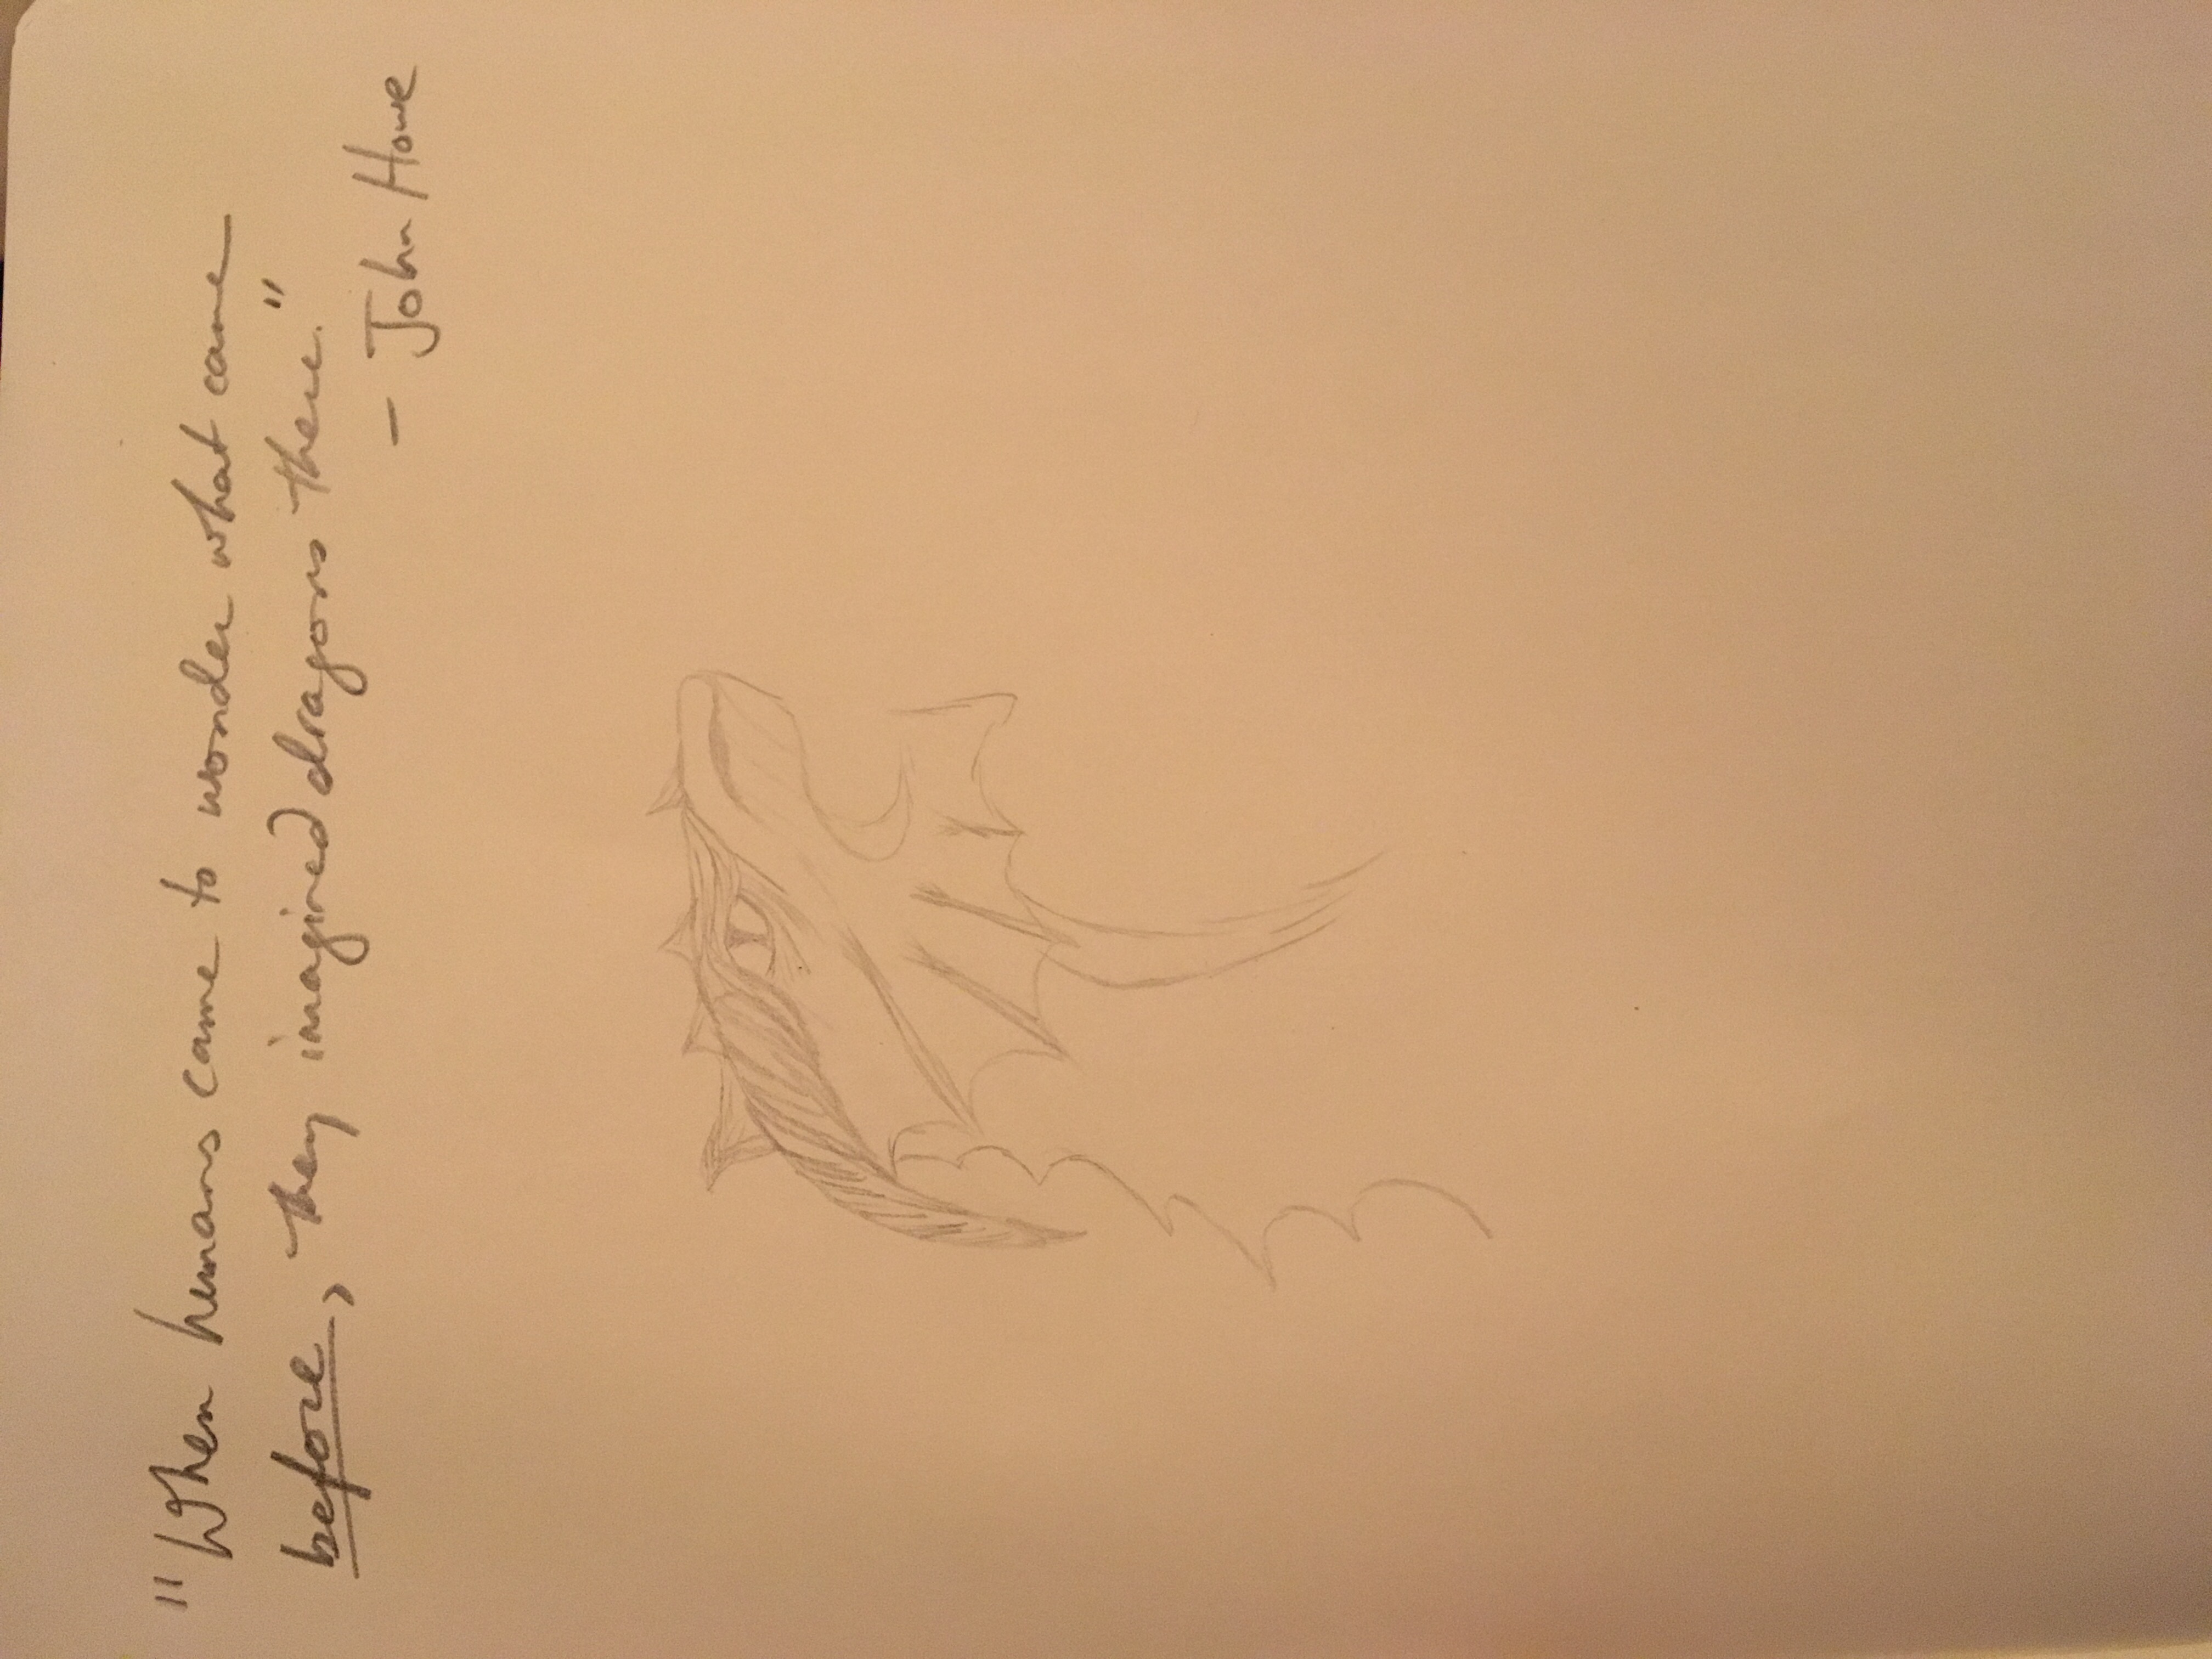 Sketch of a fierce dragon in pencil hand, half complete